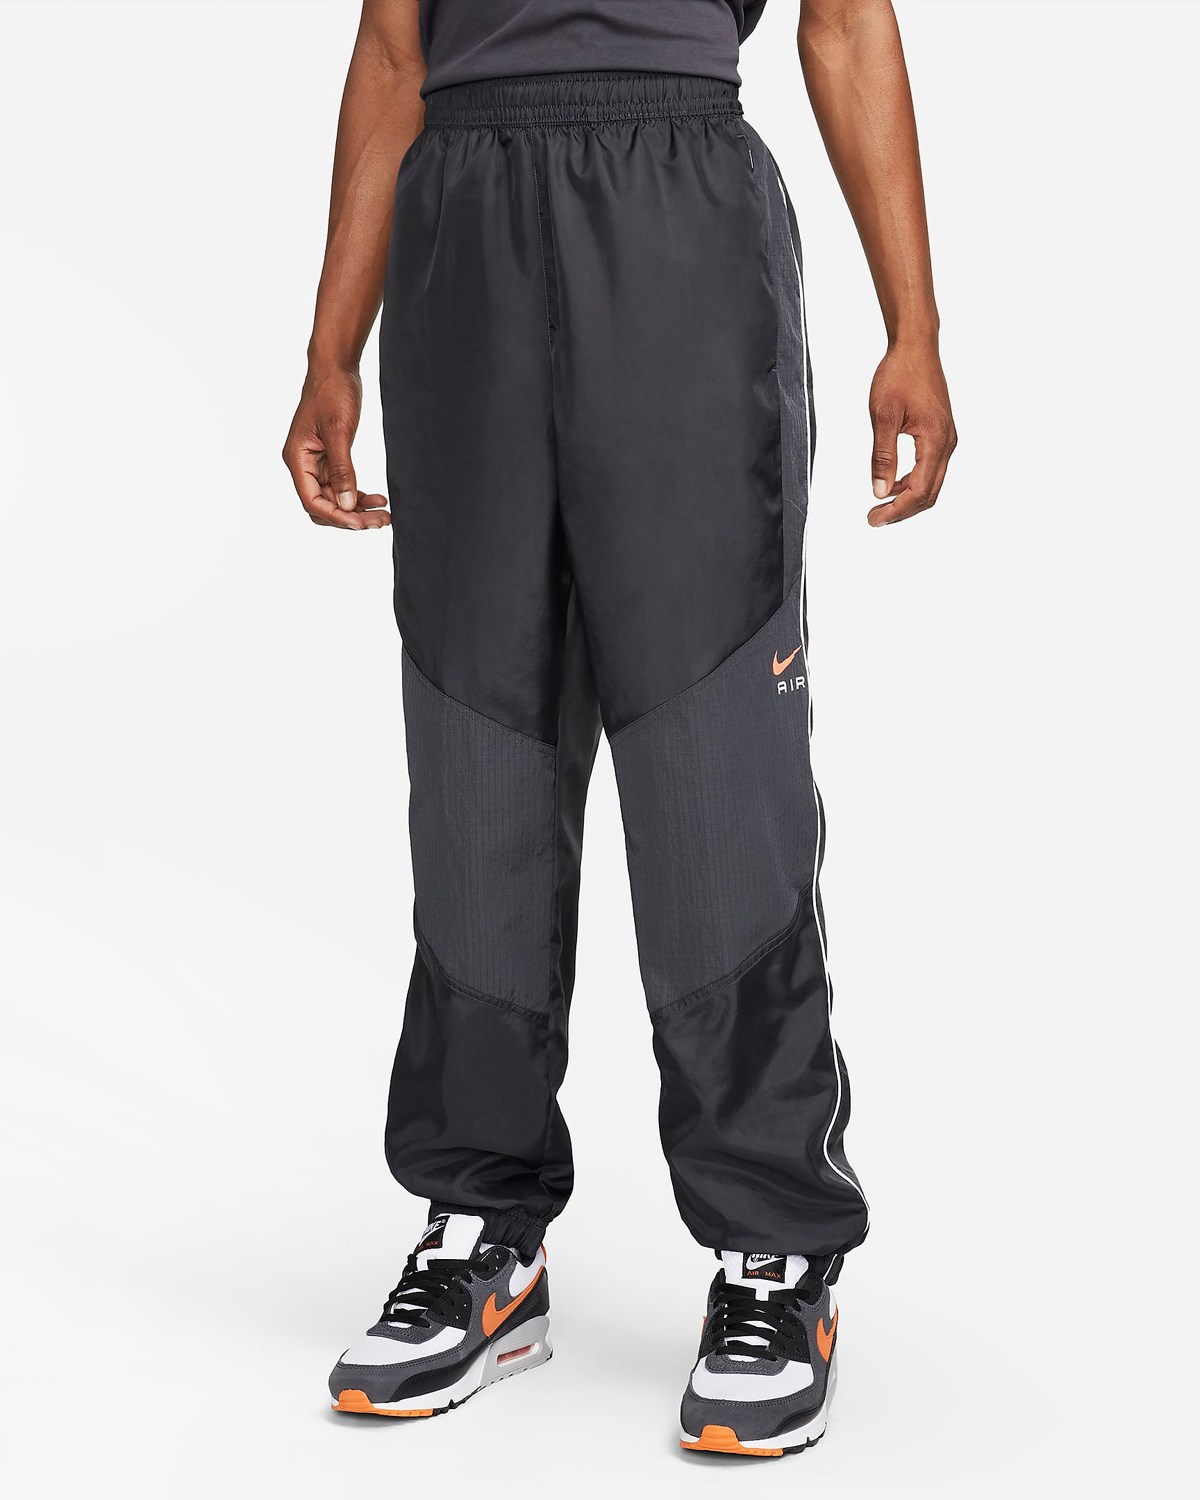 Nike-Air-Marcus-Rashford-Woven-Pants-Anthracite